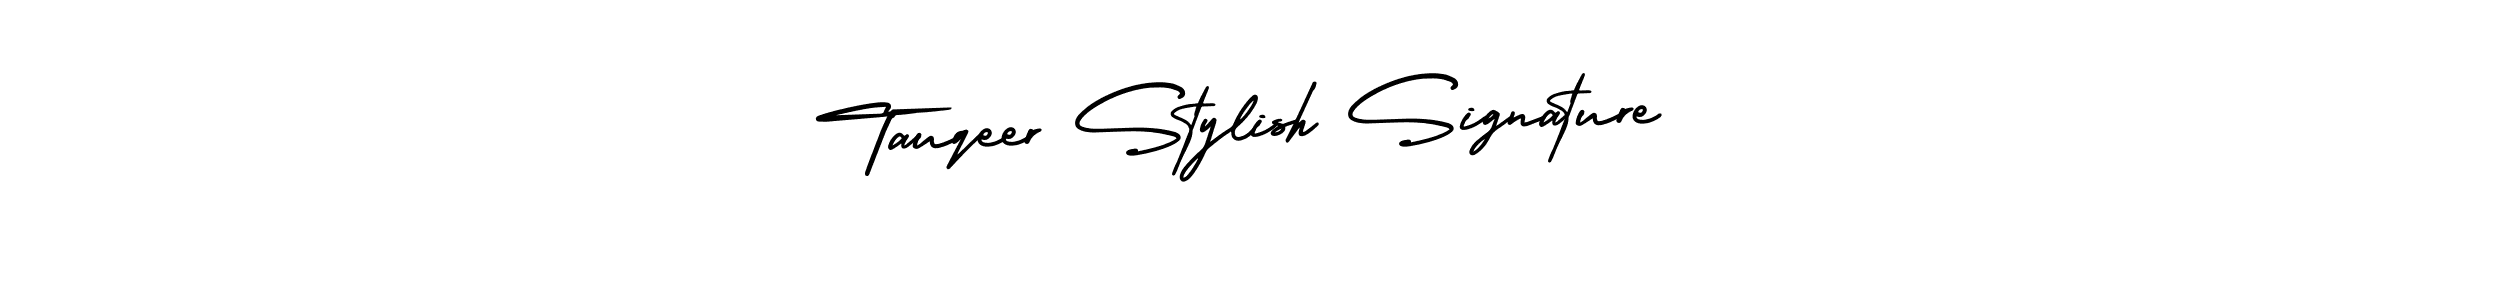 Best and Professional Signature Style for Tauqeer Stylish Signature. AmerikaSignatureDemo-Regular Best Signature Style Collection. Tauqeer Stylish Signature signature style 3 images and pictures png